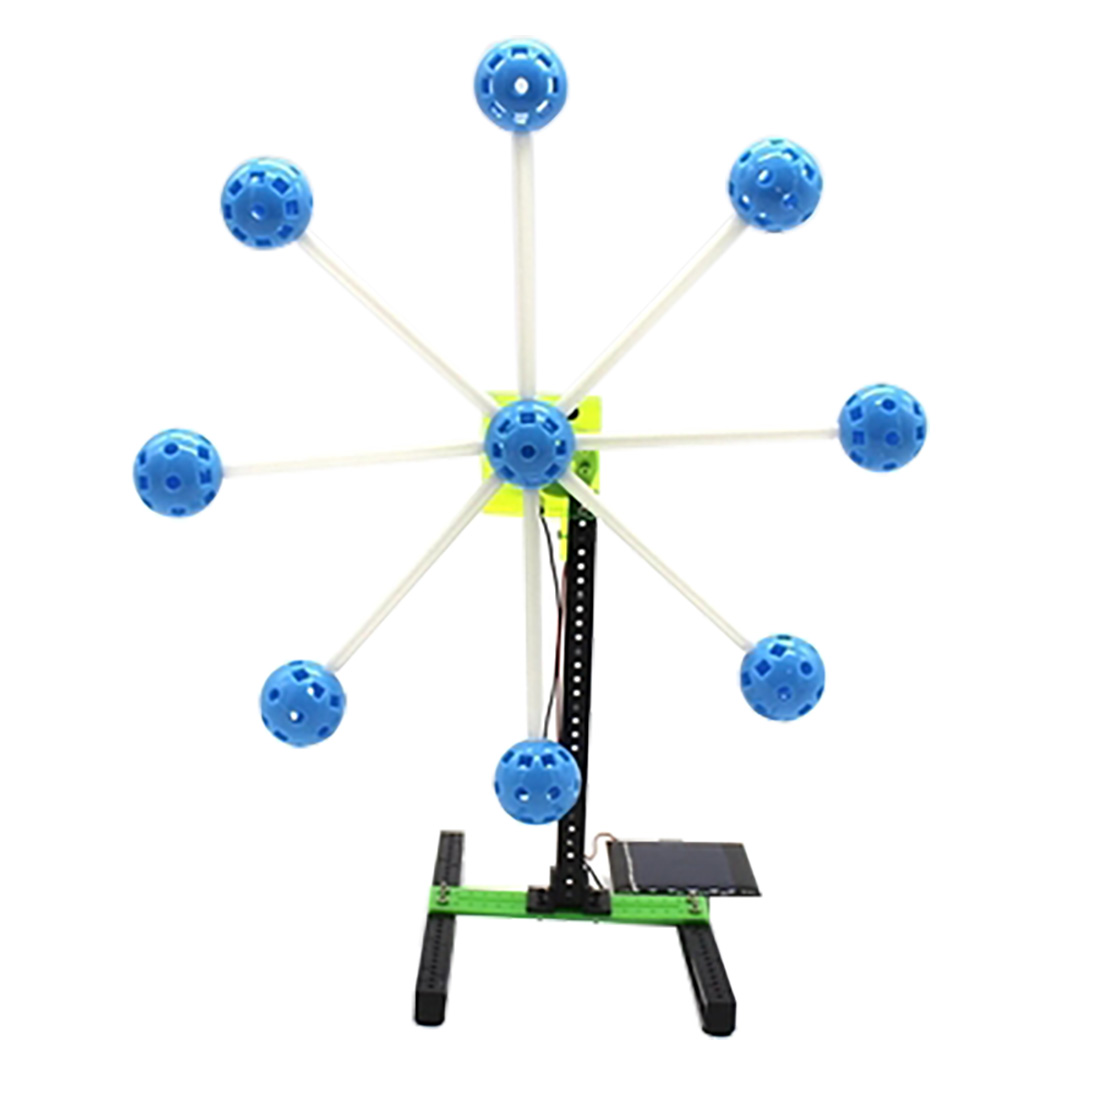 F17930 Solar Power Invention Kit Toy Ferris Wheel Building Model Smart Robot Car 